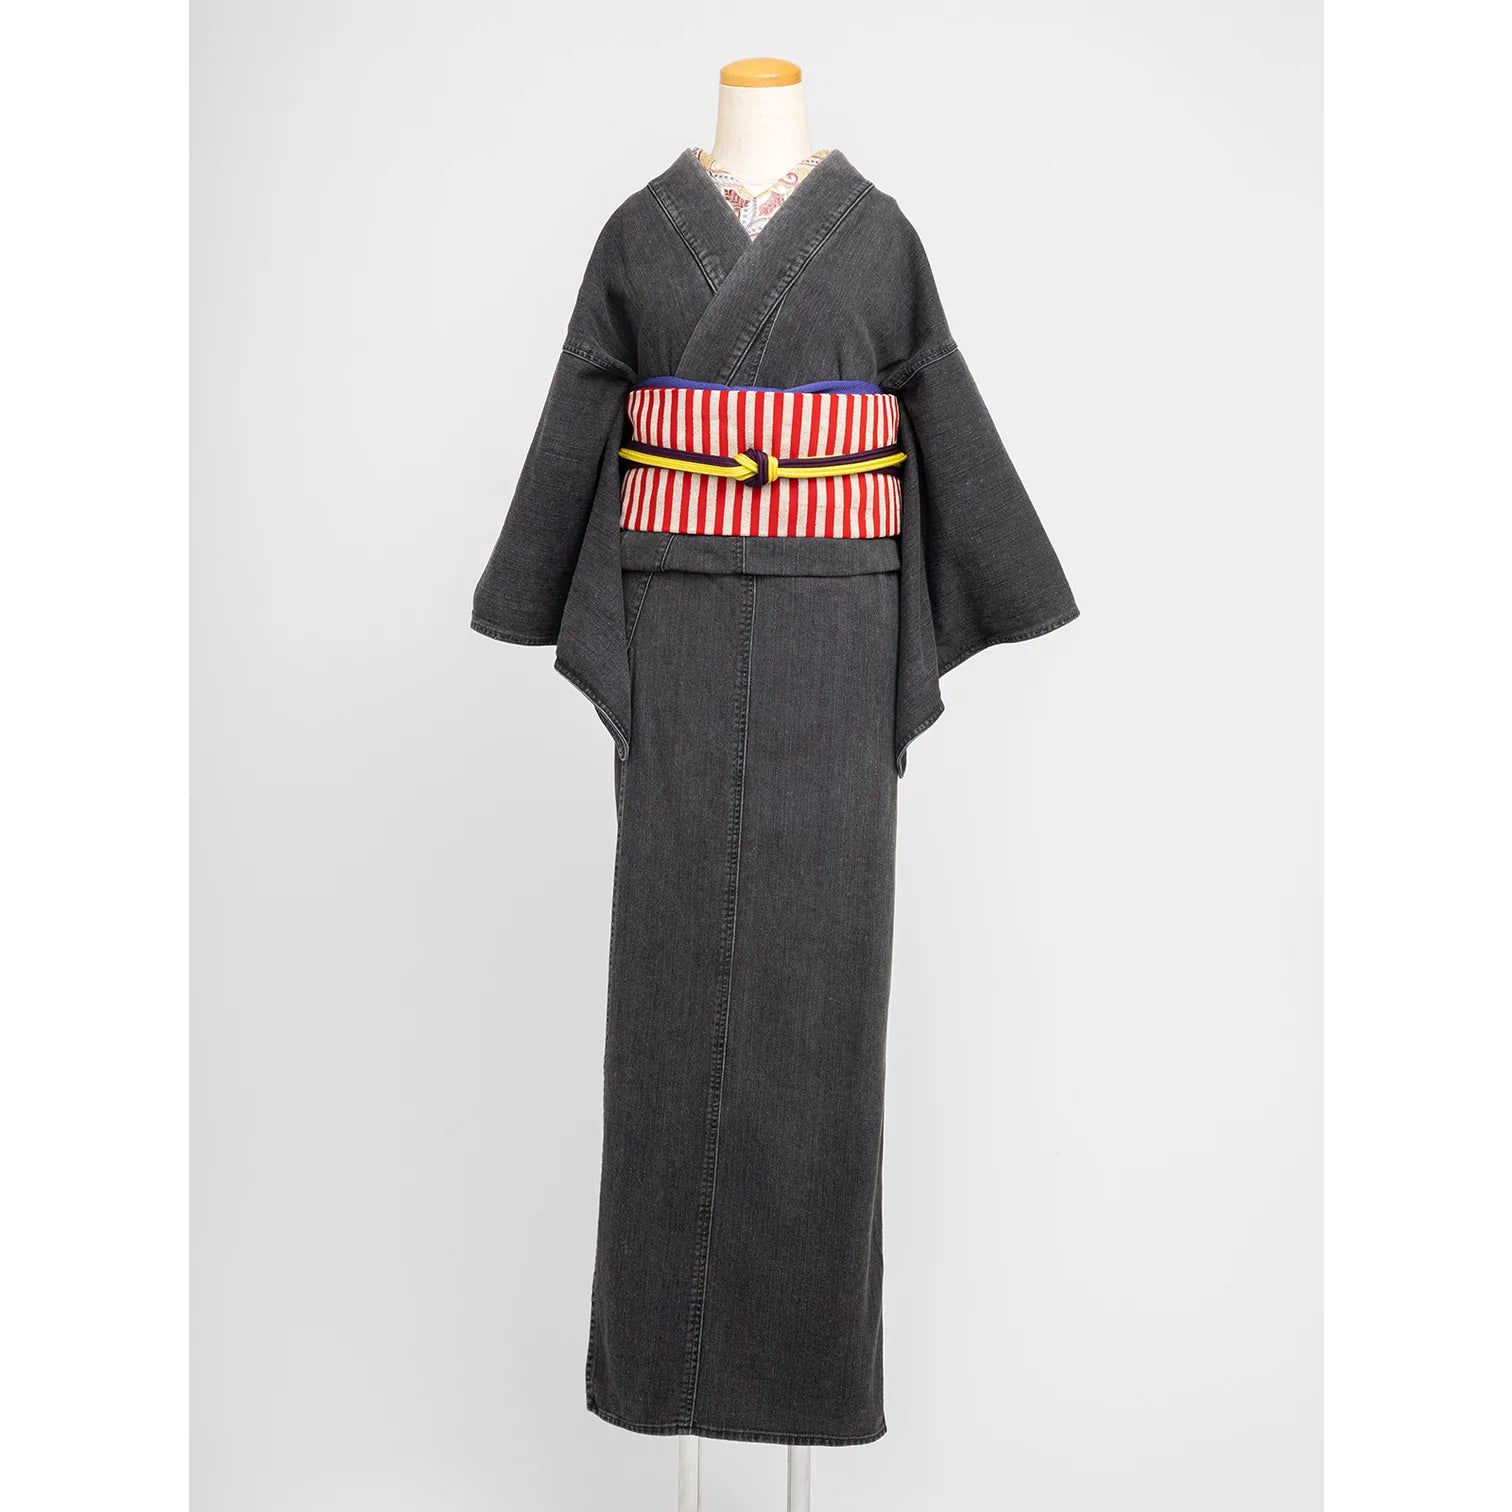 KAPUKI original Nagoya obi 9-inch "sparkling stripes" pure silk antique reproduction pattern